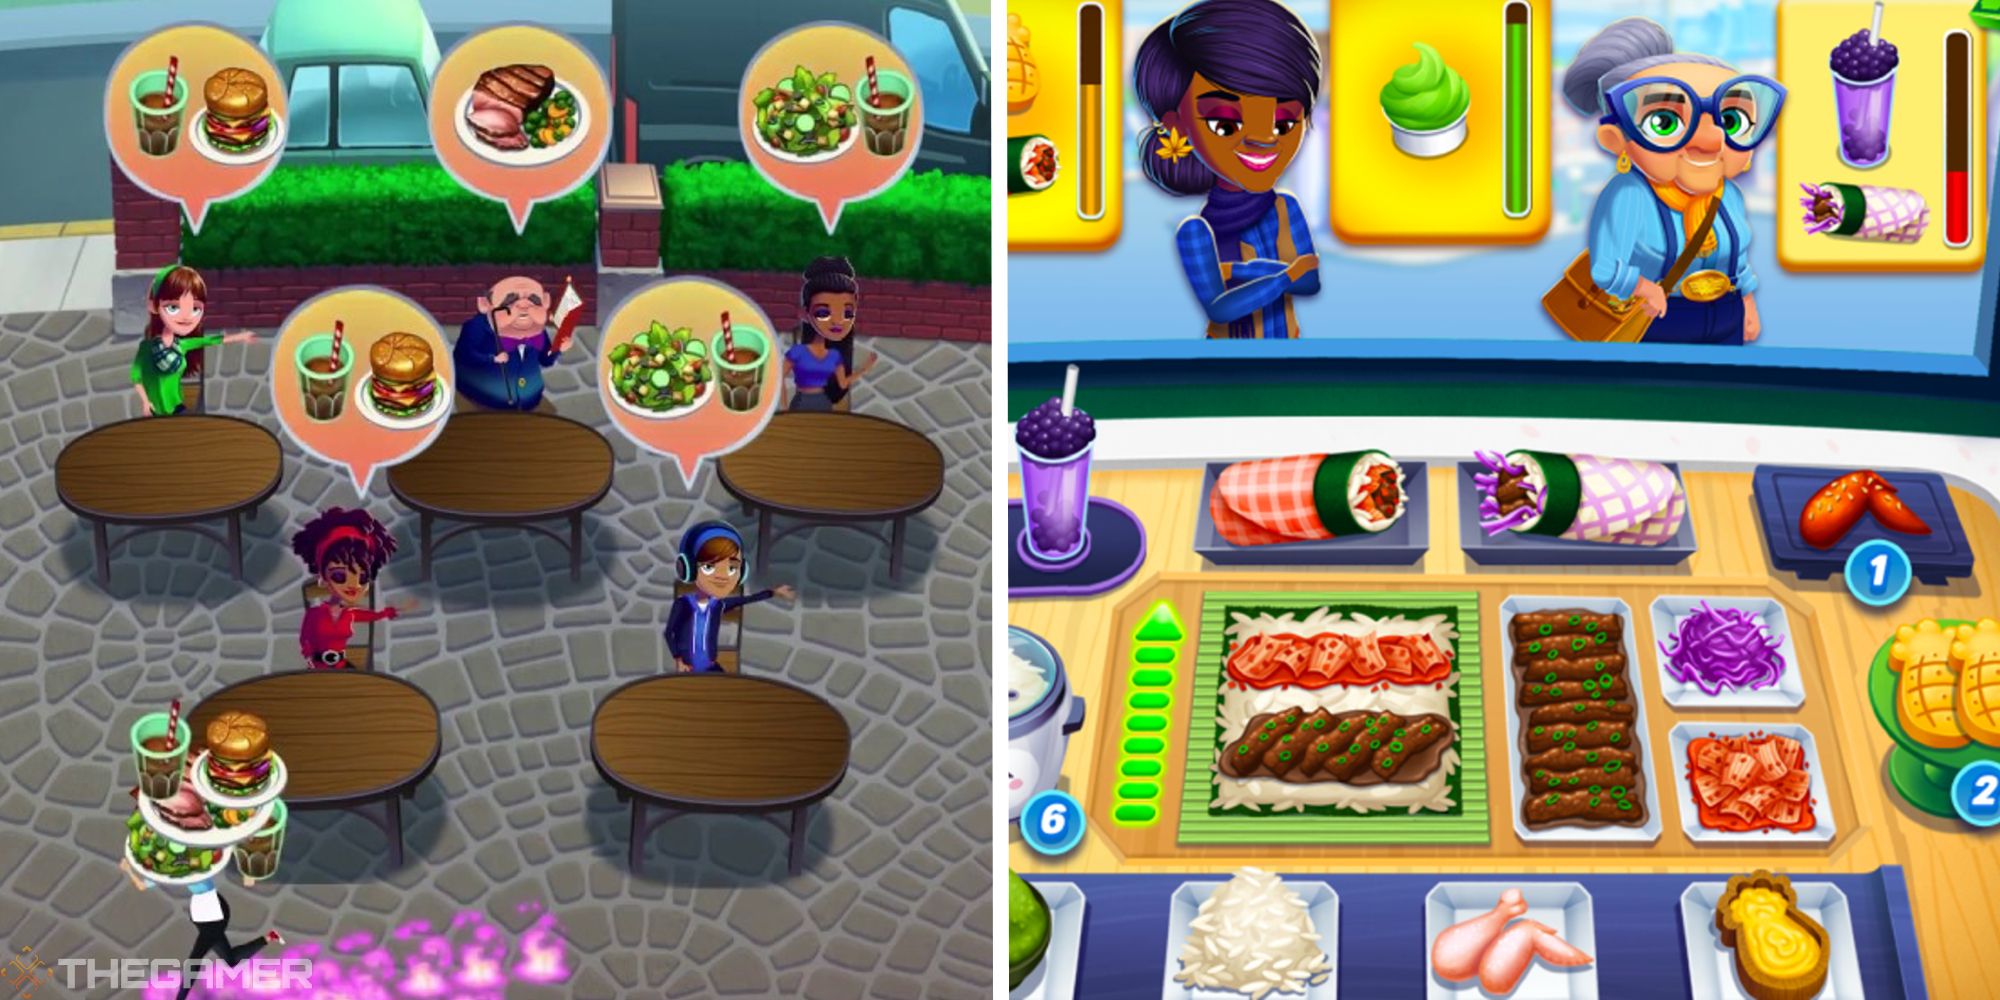 split image showing gameplay from diner dash adventures